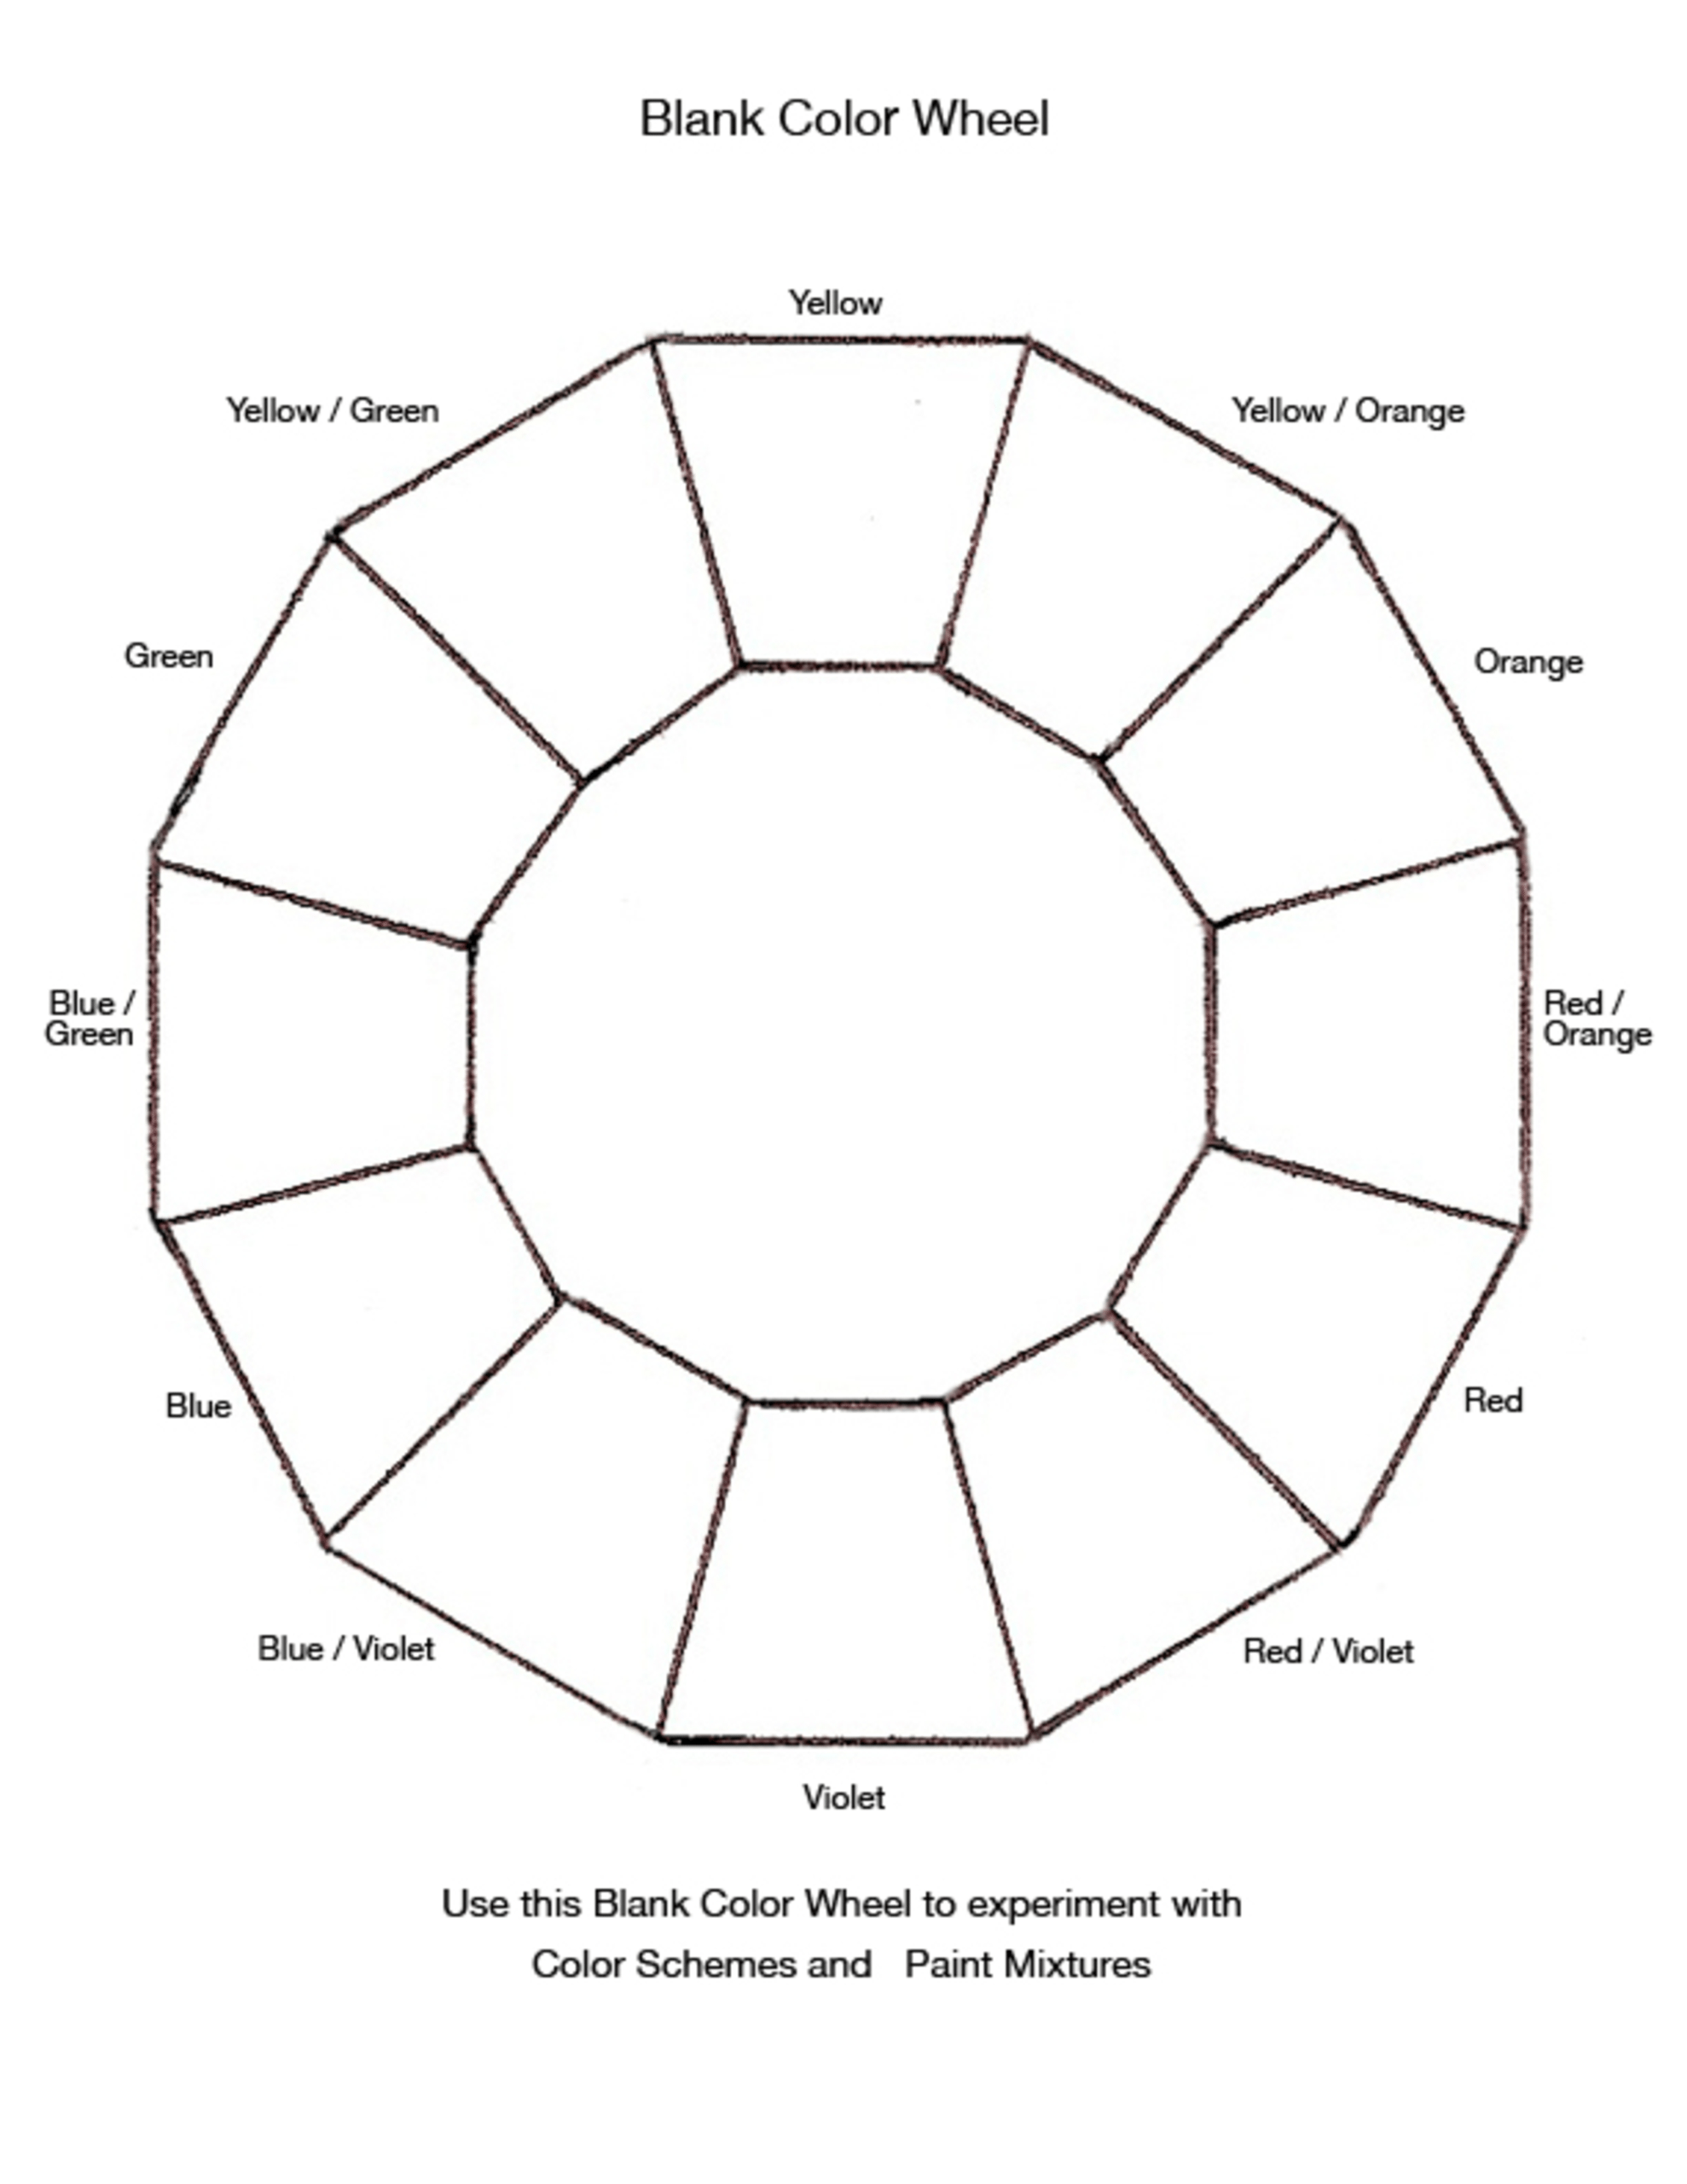 Blank Color Wheel Chart | Templates At Allbusinesstemplates Within Blank Color Wheel Template